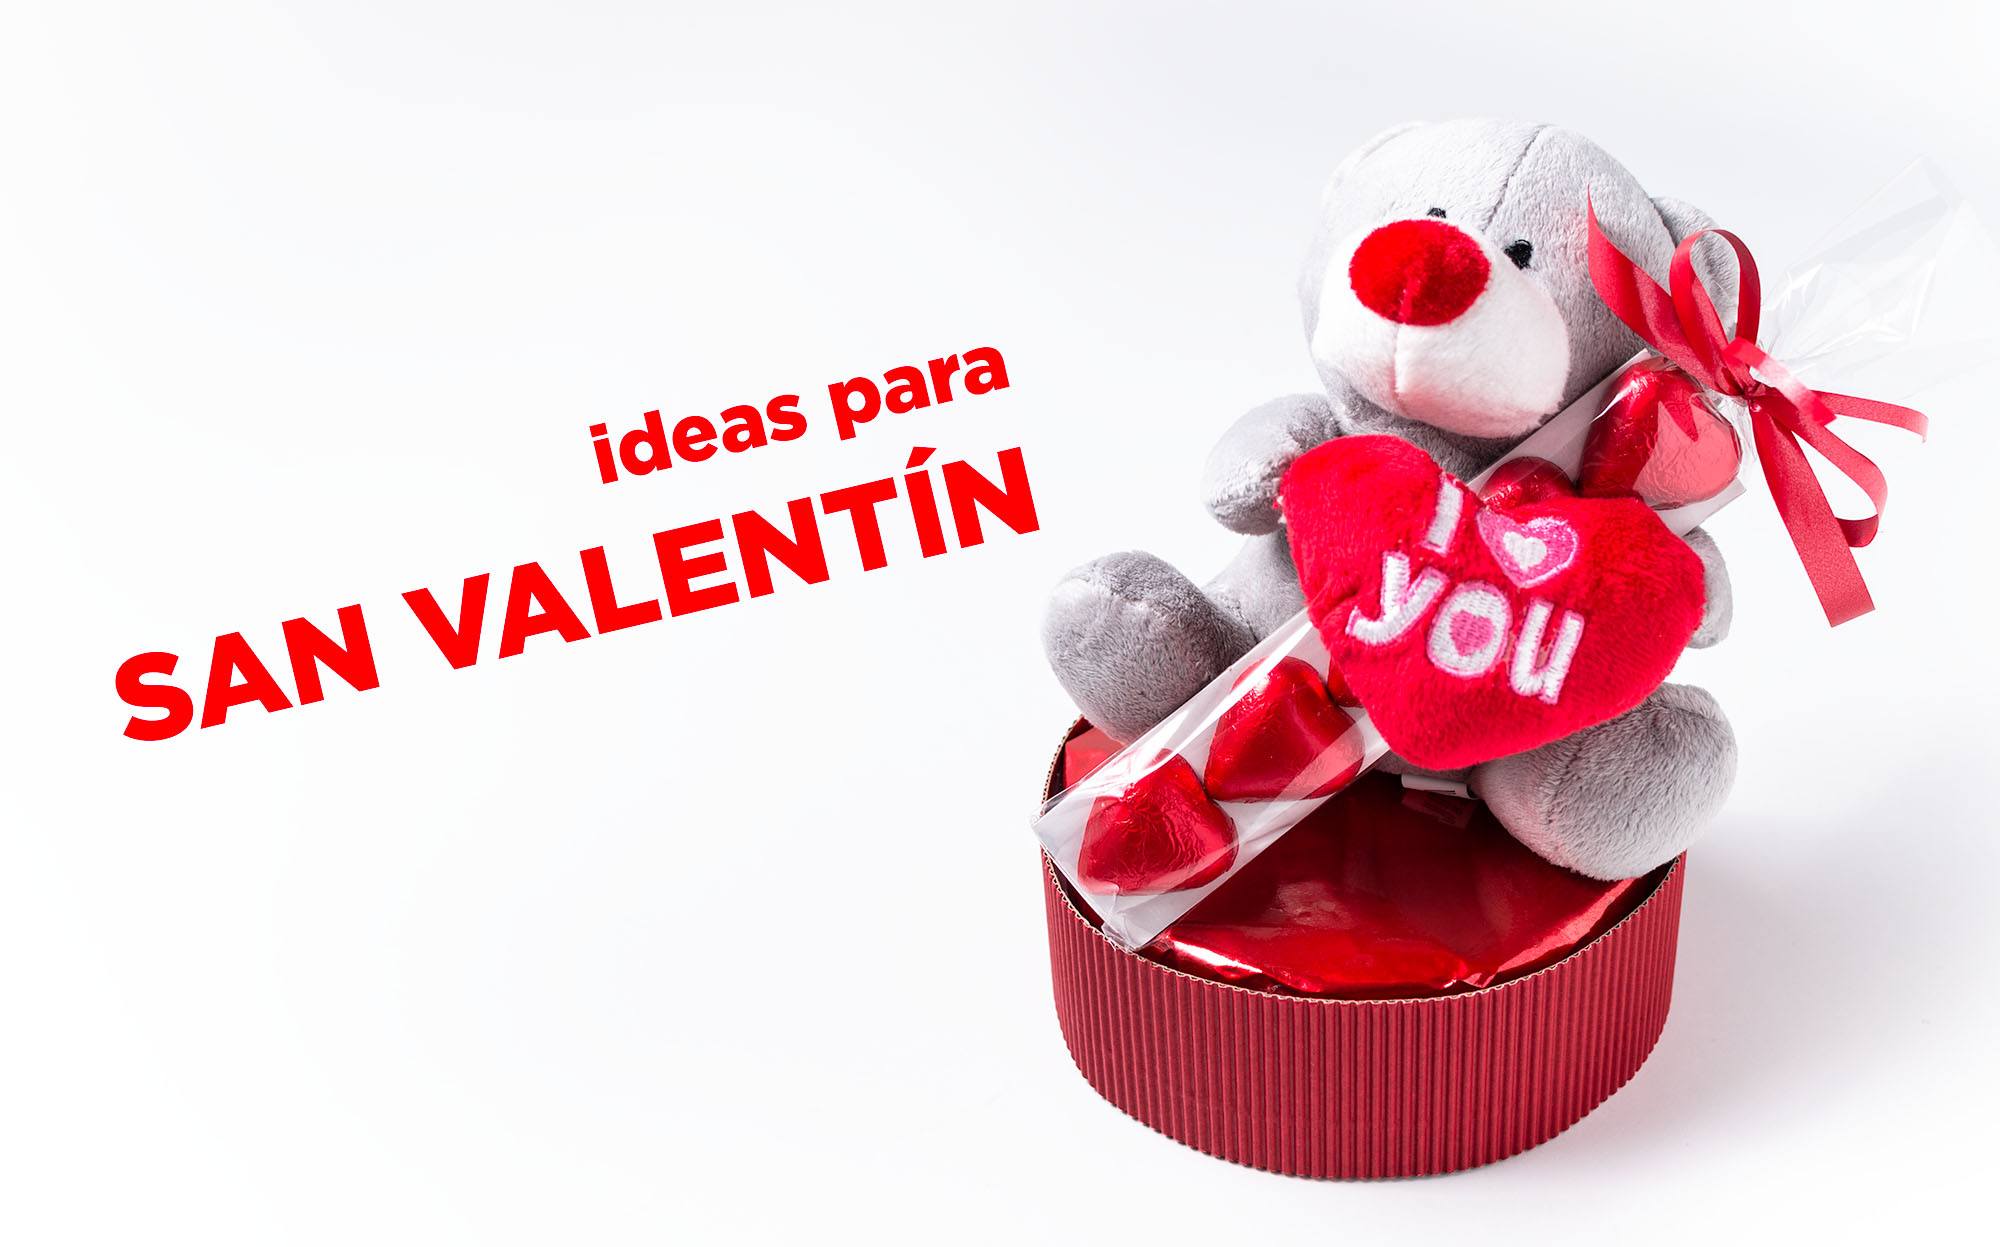 11 regalos de San Valentín para sorprender a tu pareja - Blog